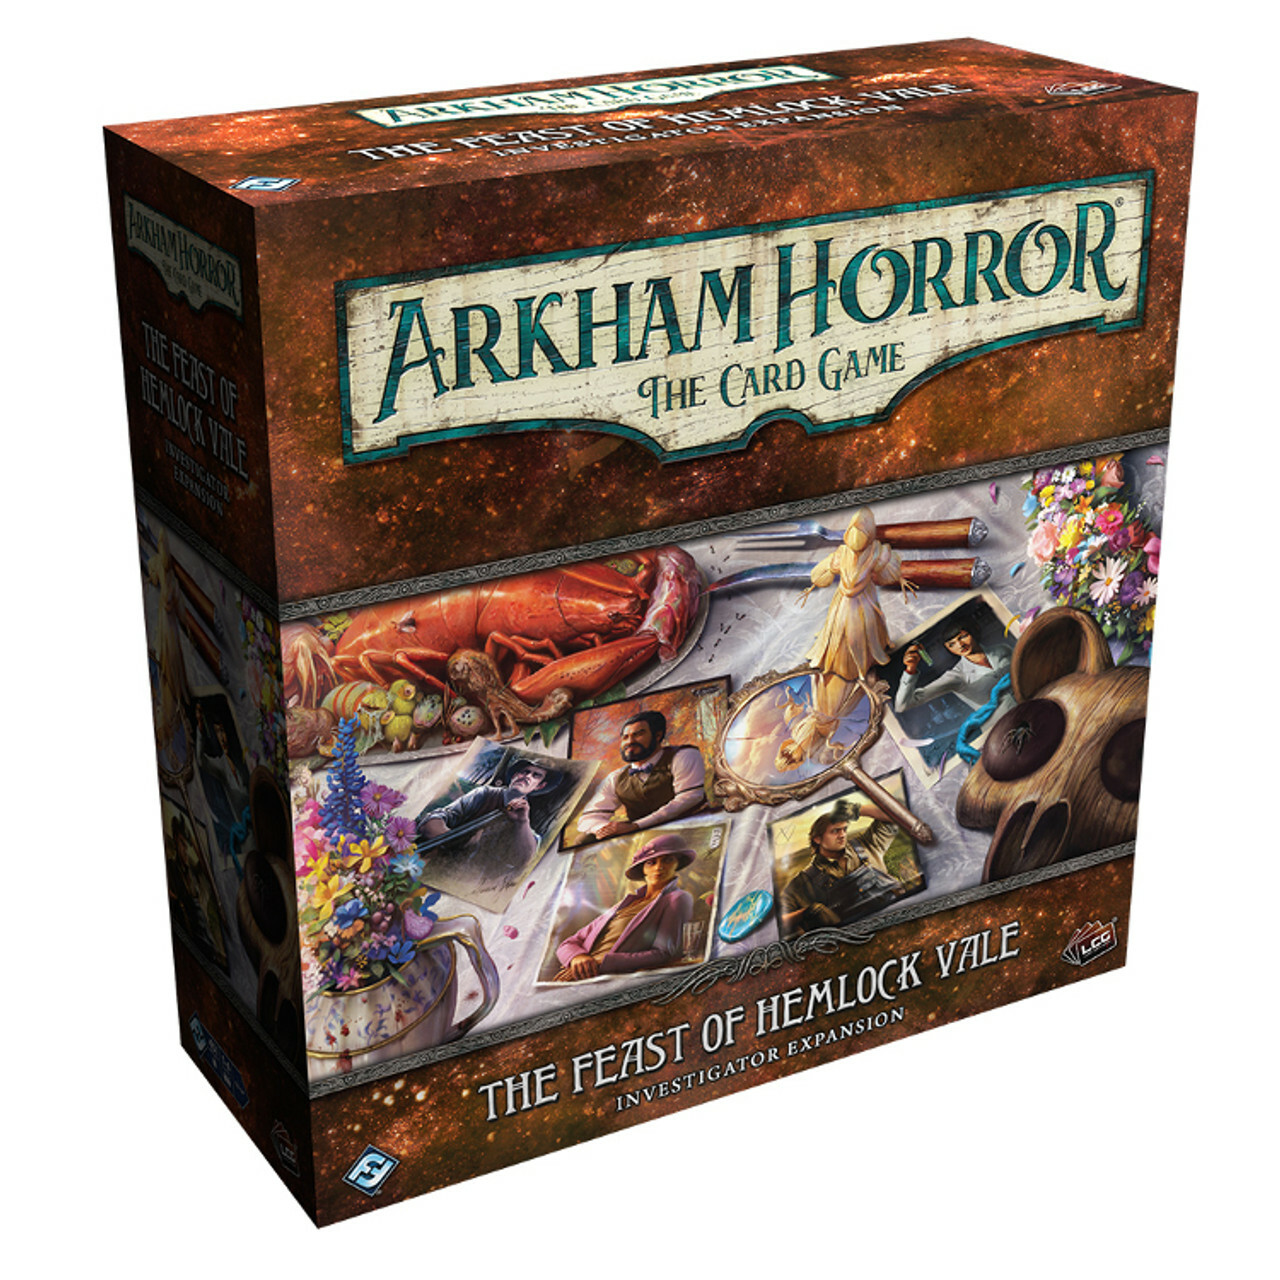 Fantasy Flight Games Arkham Horror LCG: Feast of Hemlock Vale Investigator Expansion